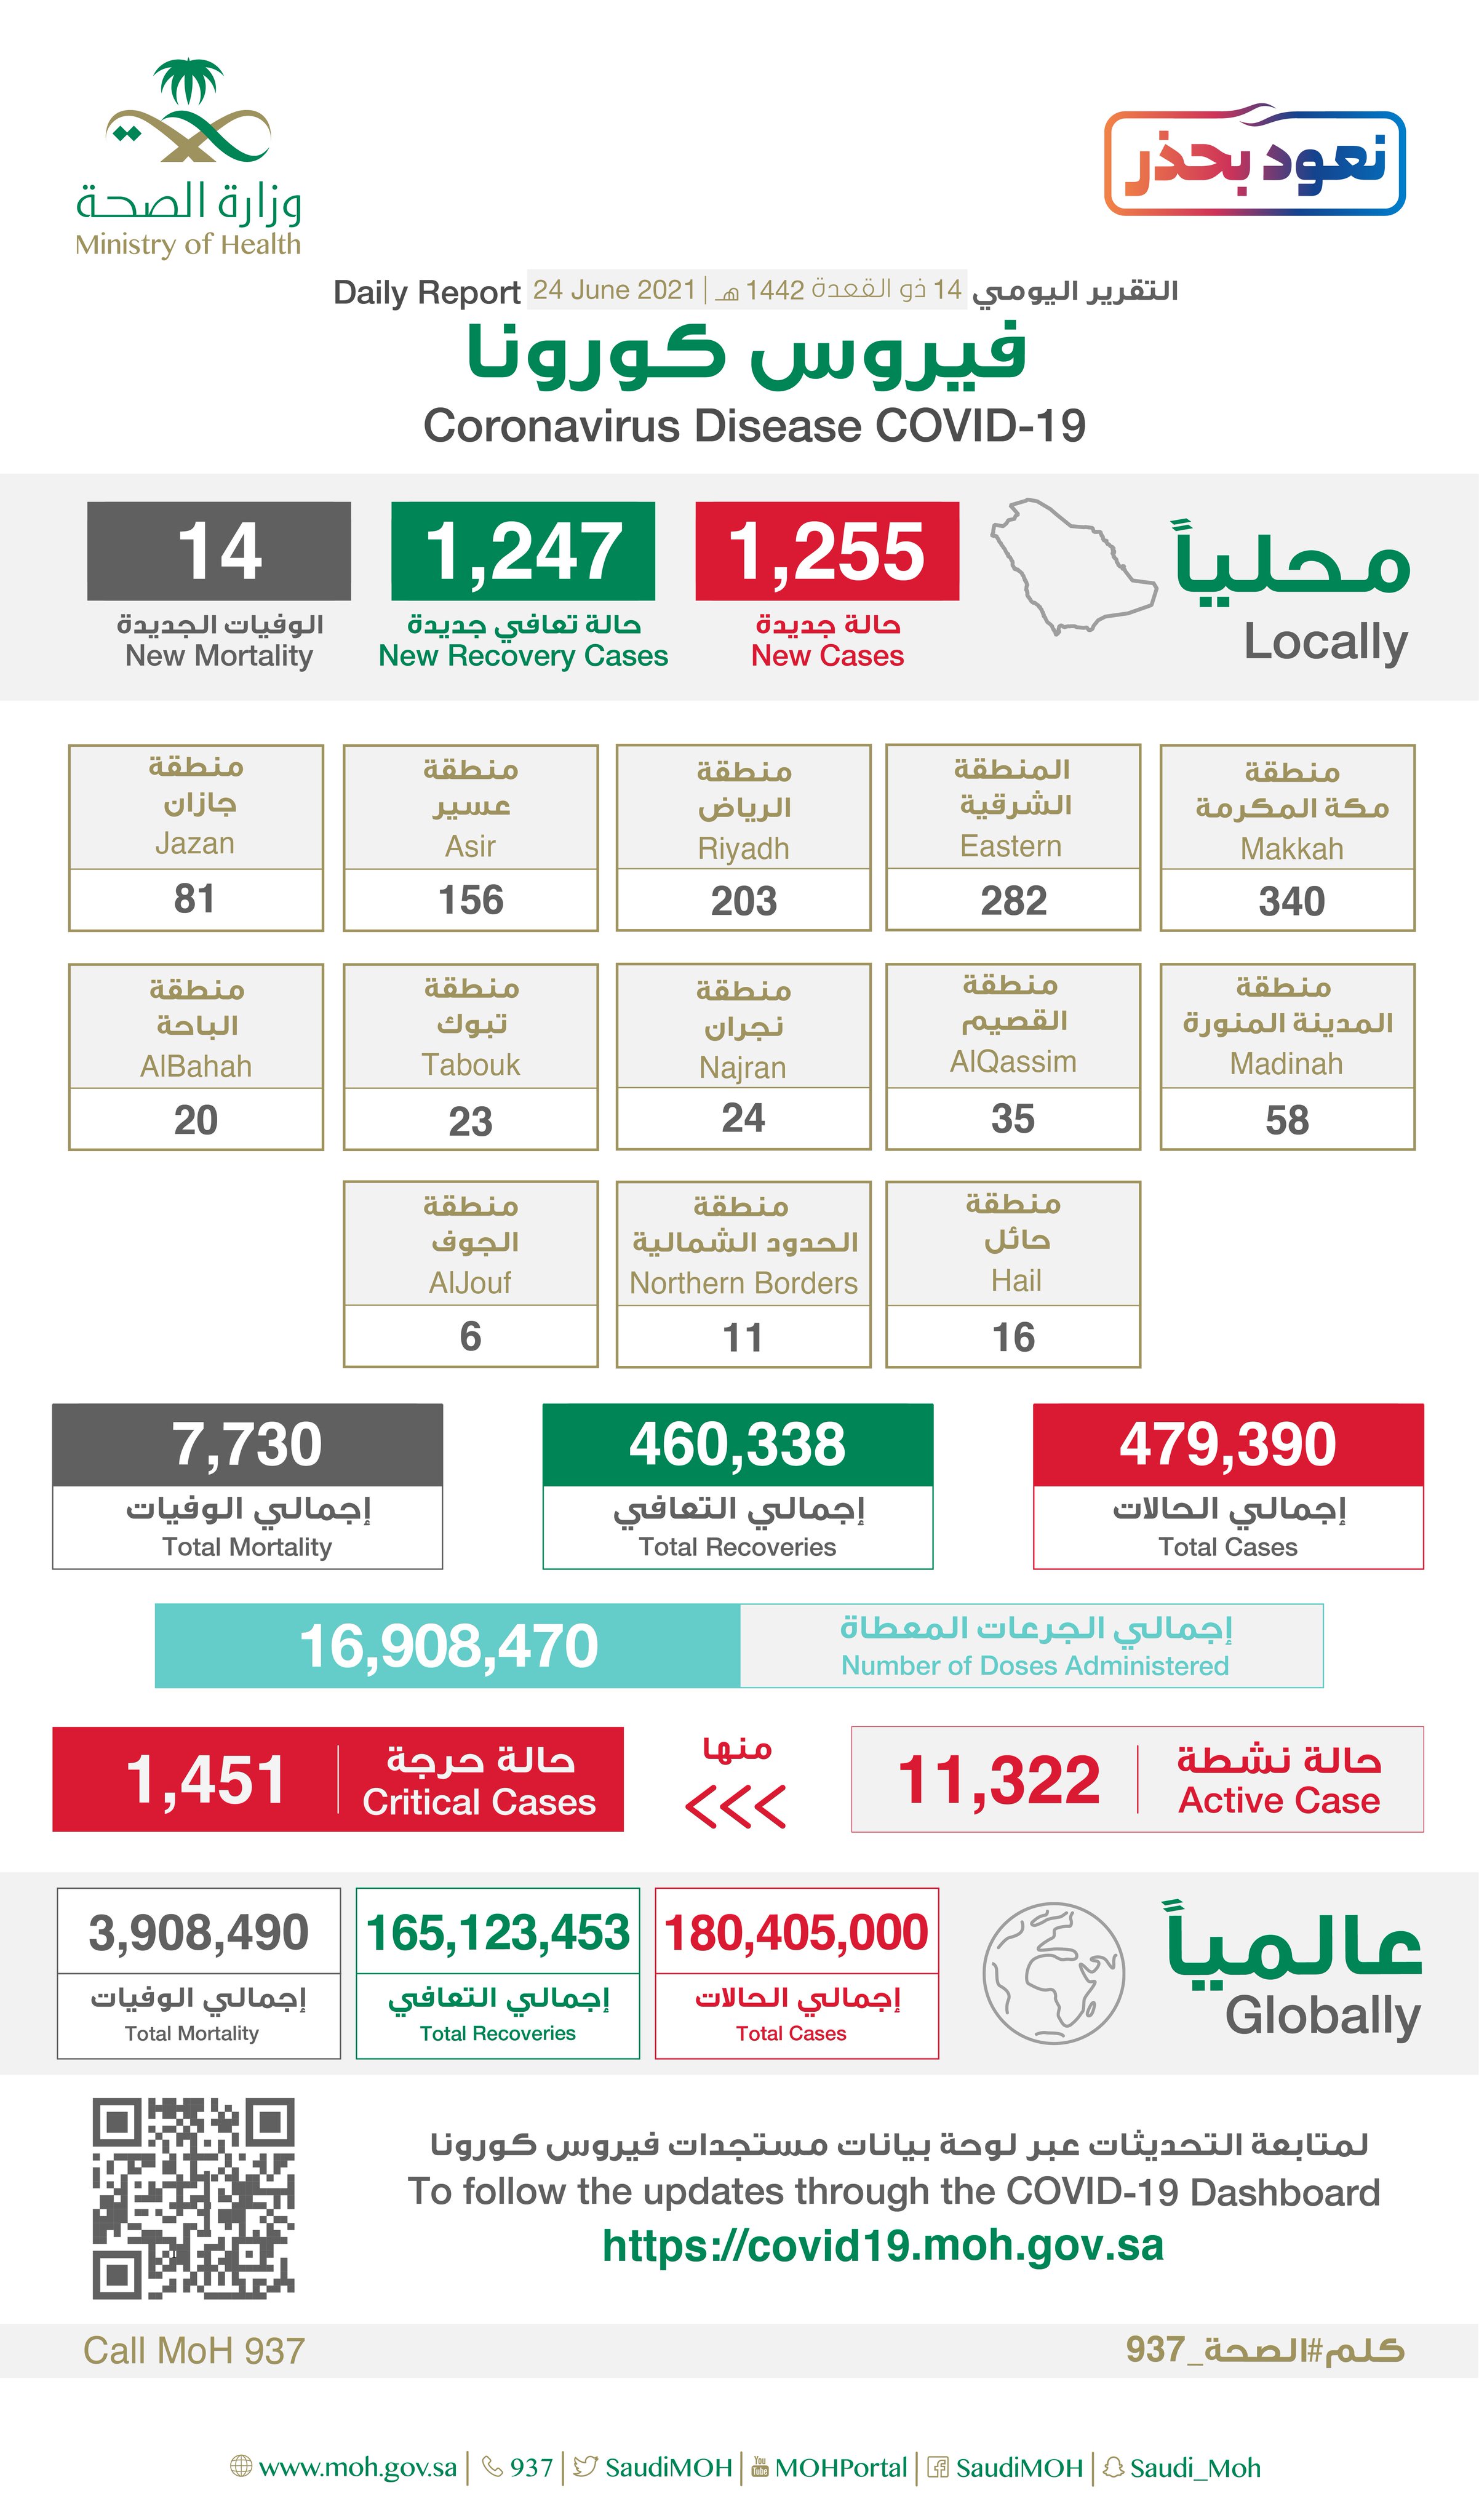 Saudi Arabia Coronavirus : Total Cases :479,390 , New Cases : 1,255 , Cured : 460,338 , Deaths: 7,730, Active Cases : 11,322